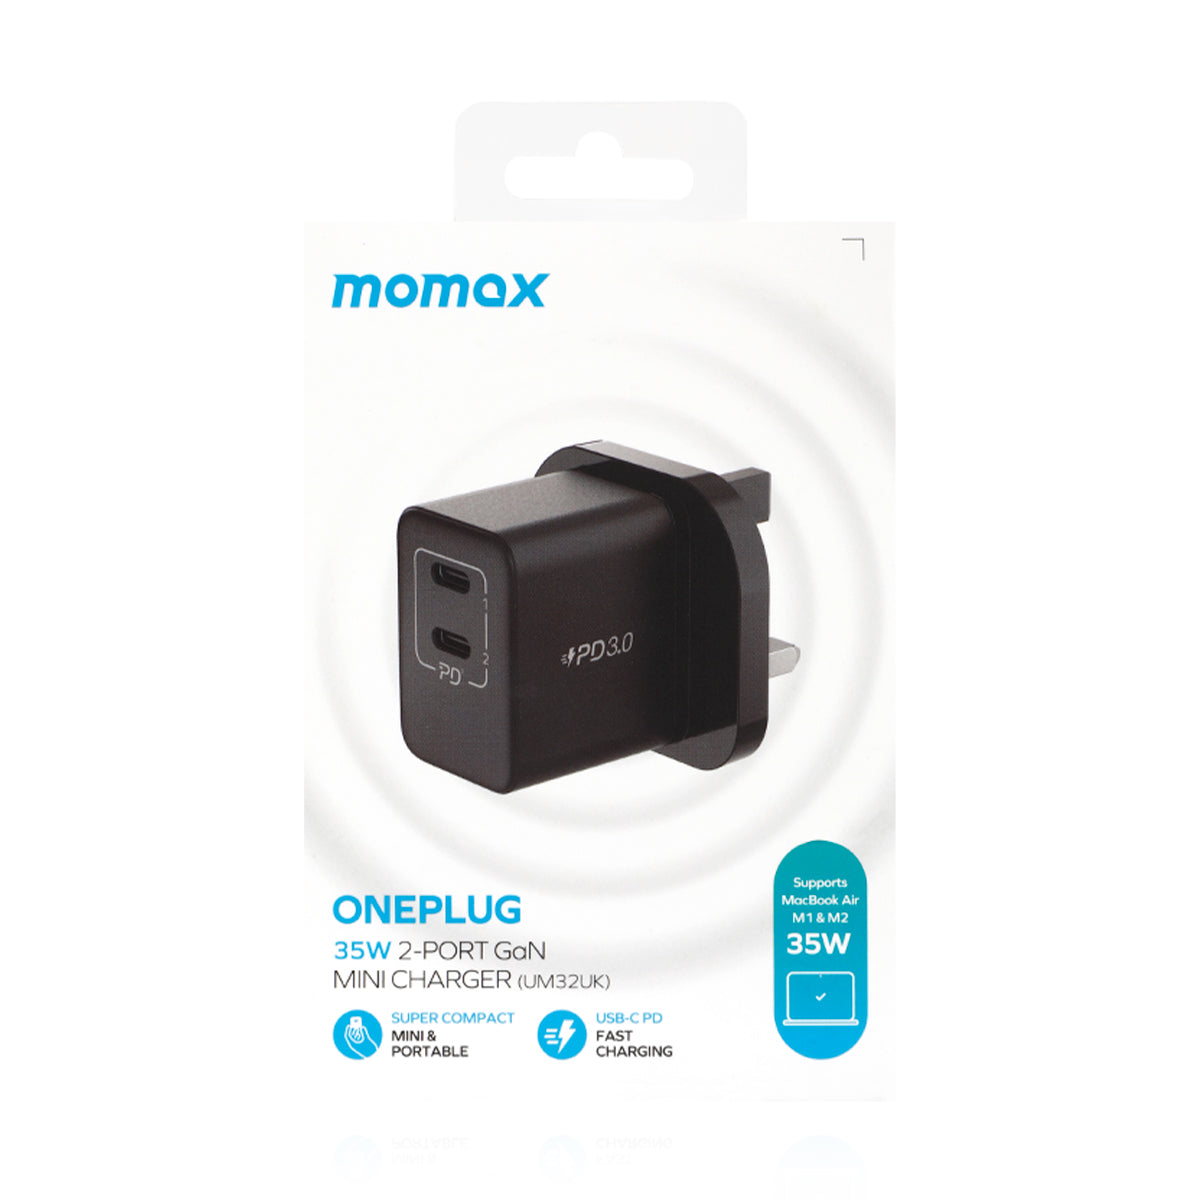 Momax One Plug 35W 2-Port GaN Mini Charger - Black